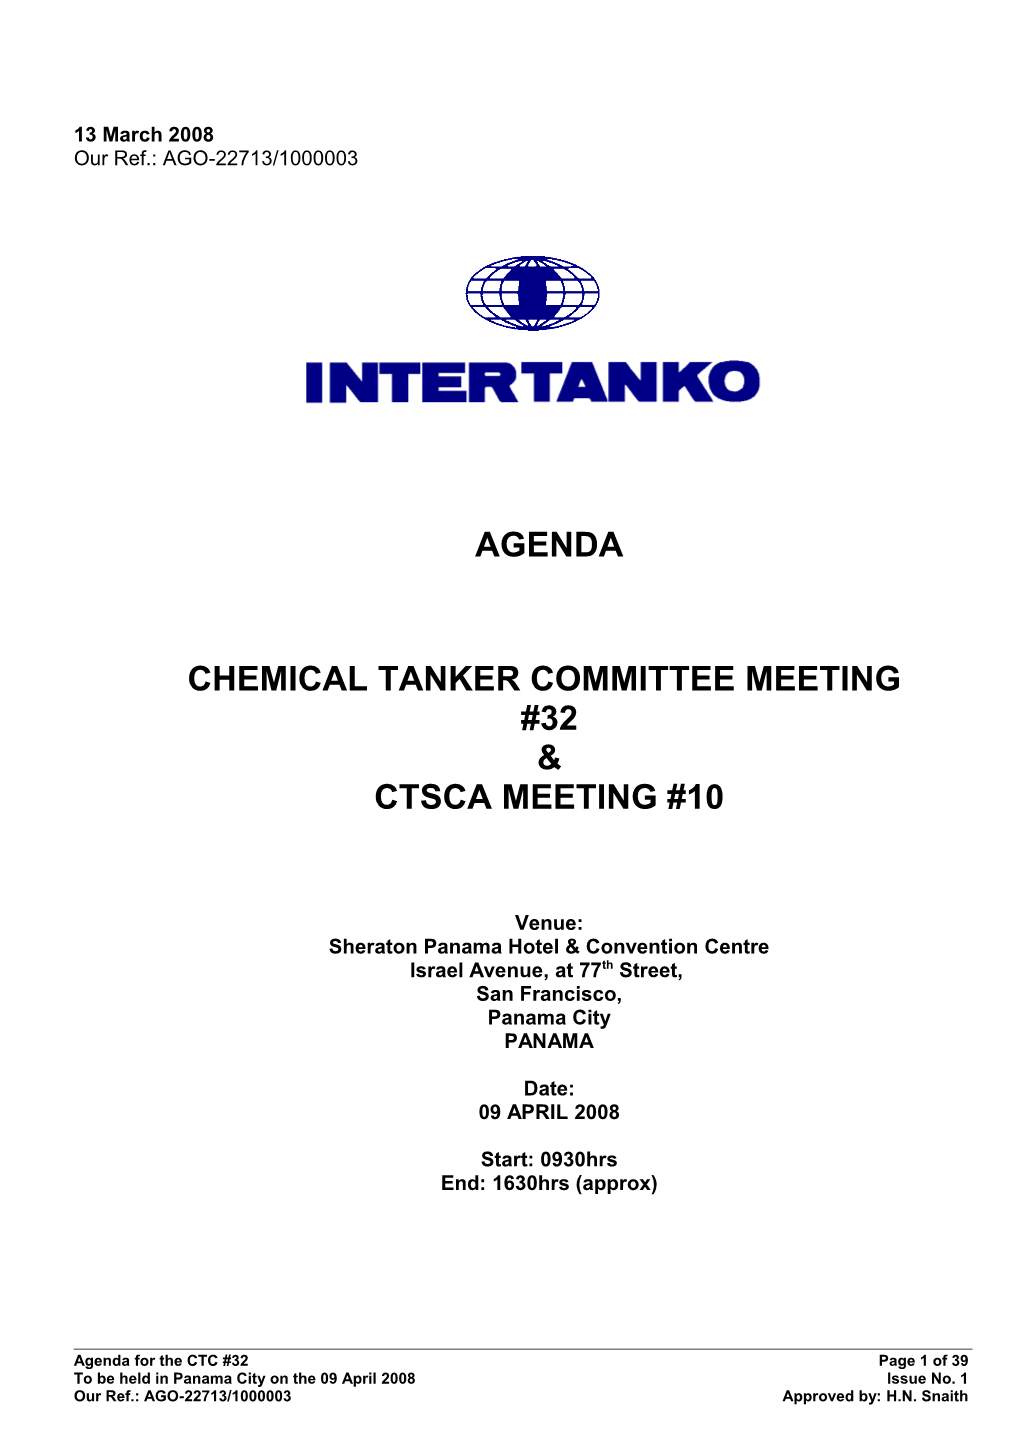 Chemical Tanker Committee Meeting